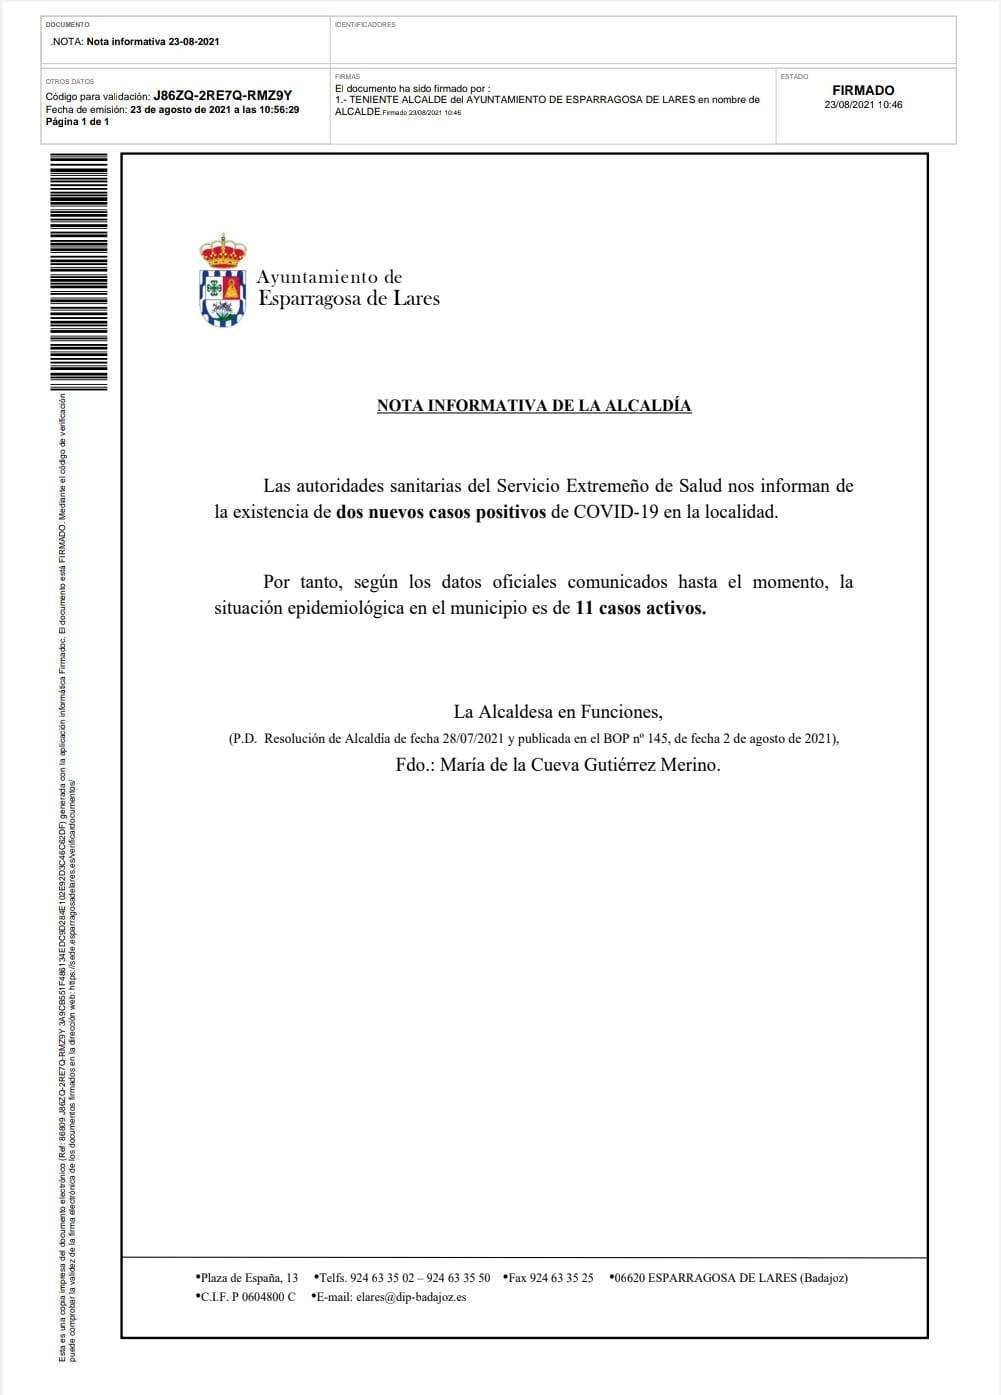 11 casos positivos activos de COVID-19 (agosto 2021) - Esparragosa de Lares (Badajoz)